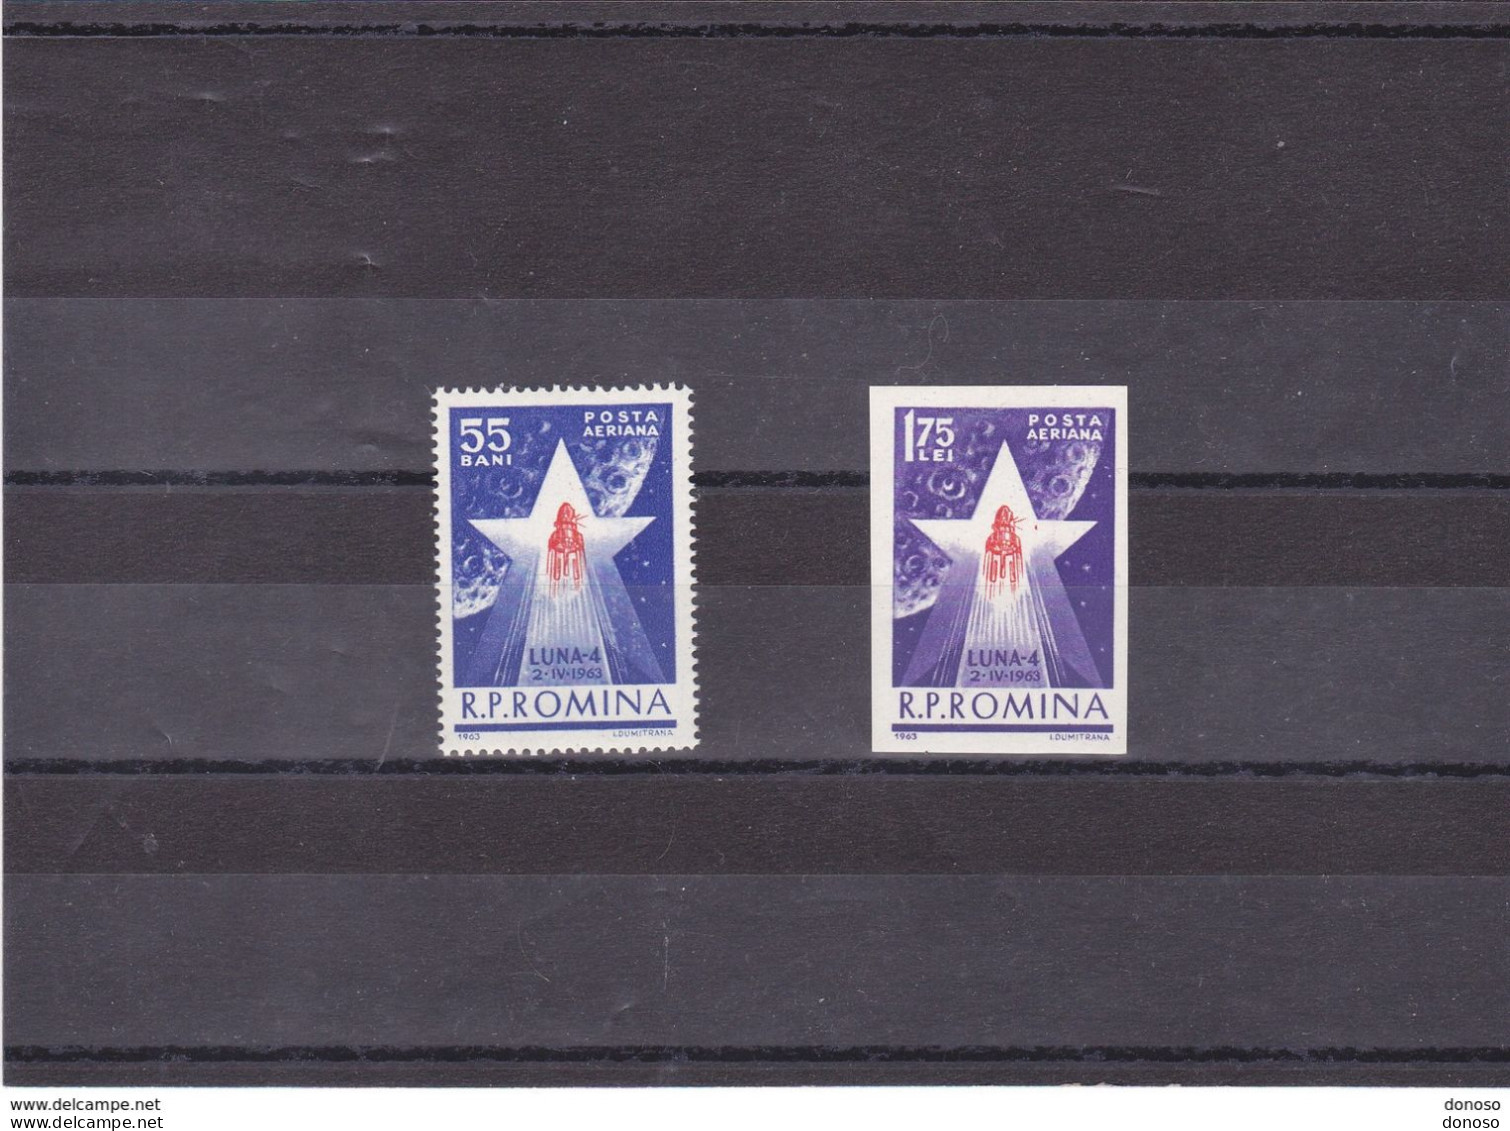 ROUMANIE 1963 ESPACE LUNIK IV Yvert PA 173-174, Michel 2143-2144 NEUF** MNH Cote 3,50 Euros - Neufs